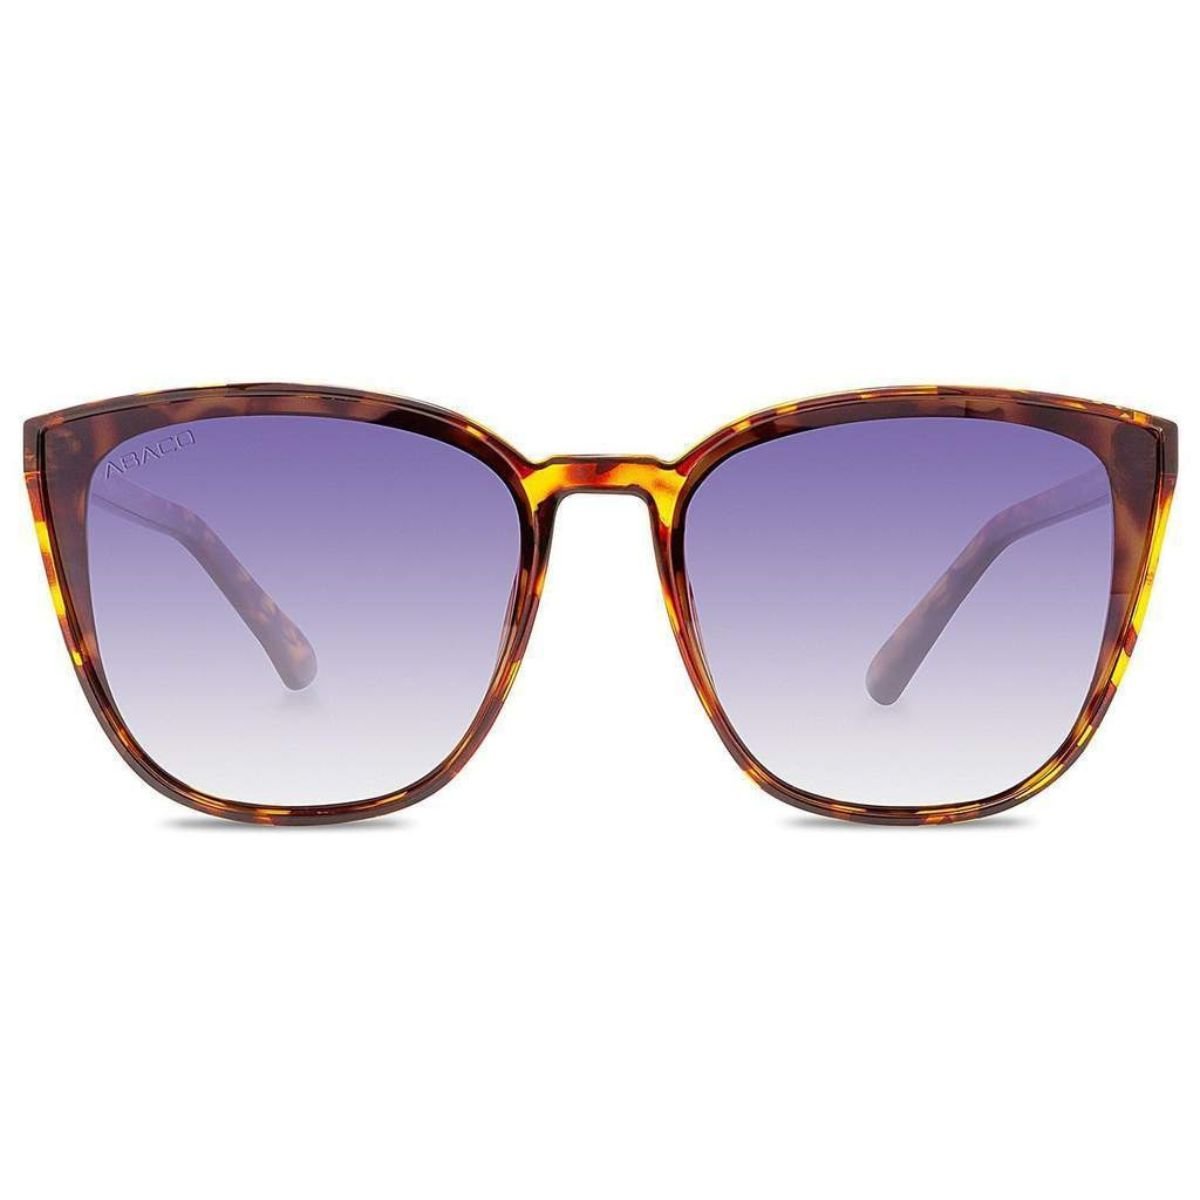 Abaco Chelsea Sunglasses in Tortoise/Blue Gradient - BoardCo